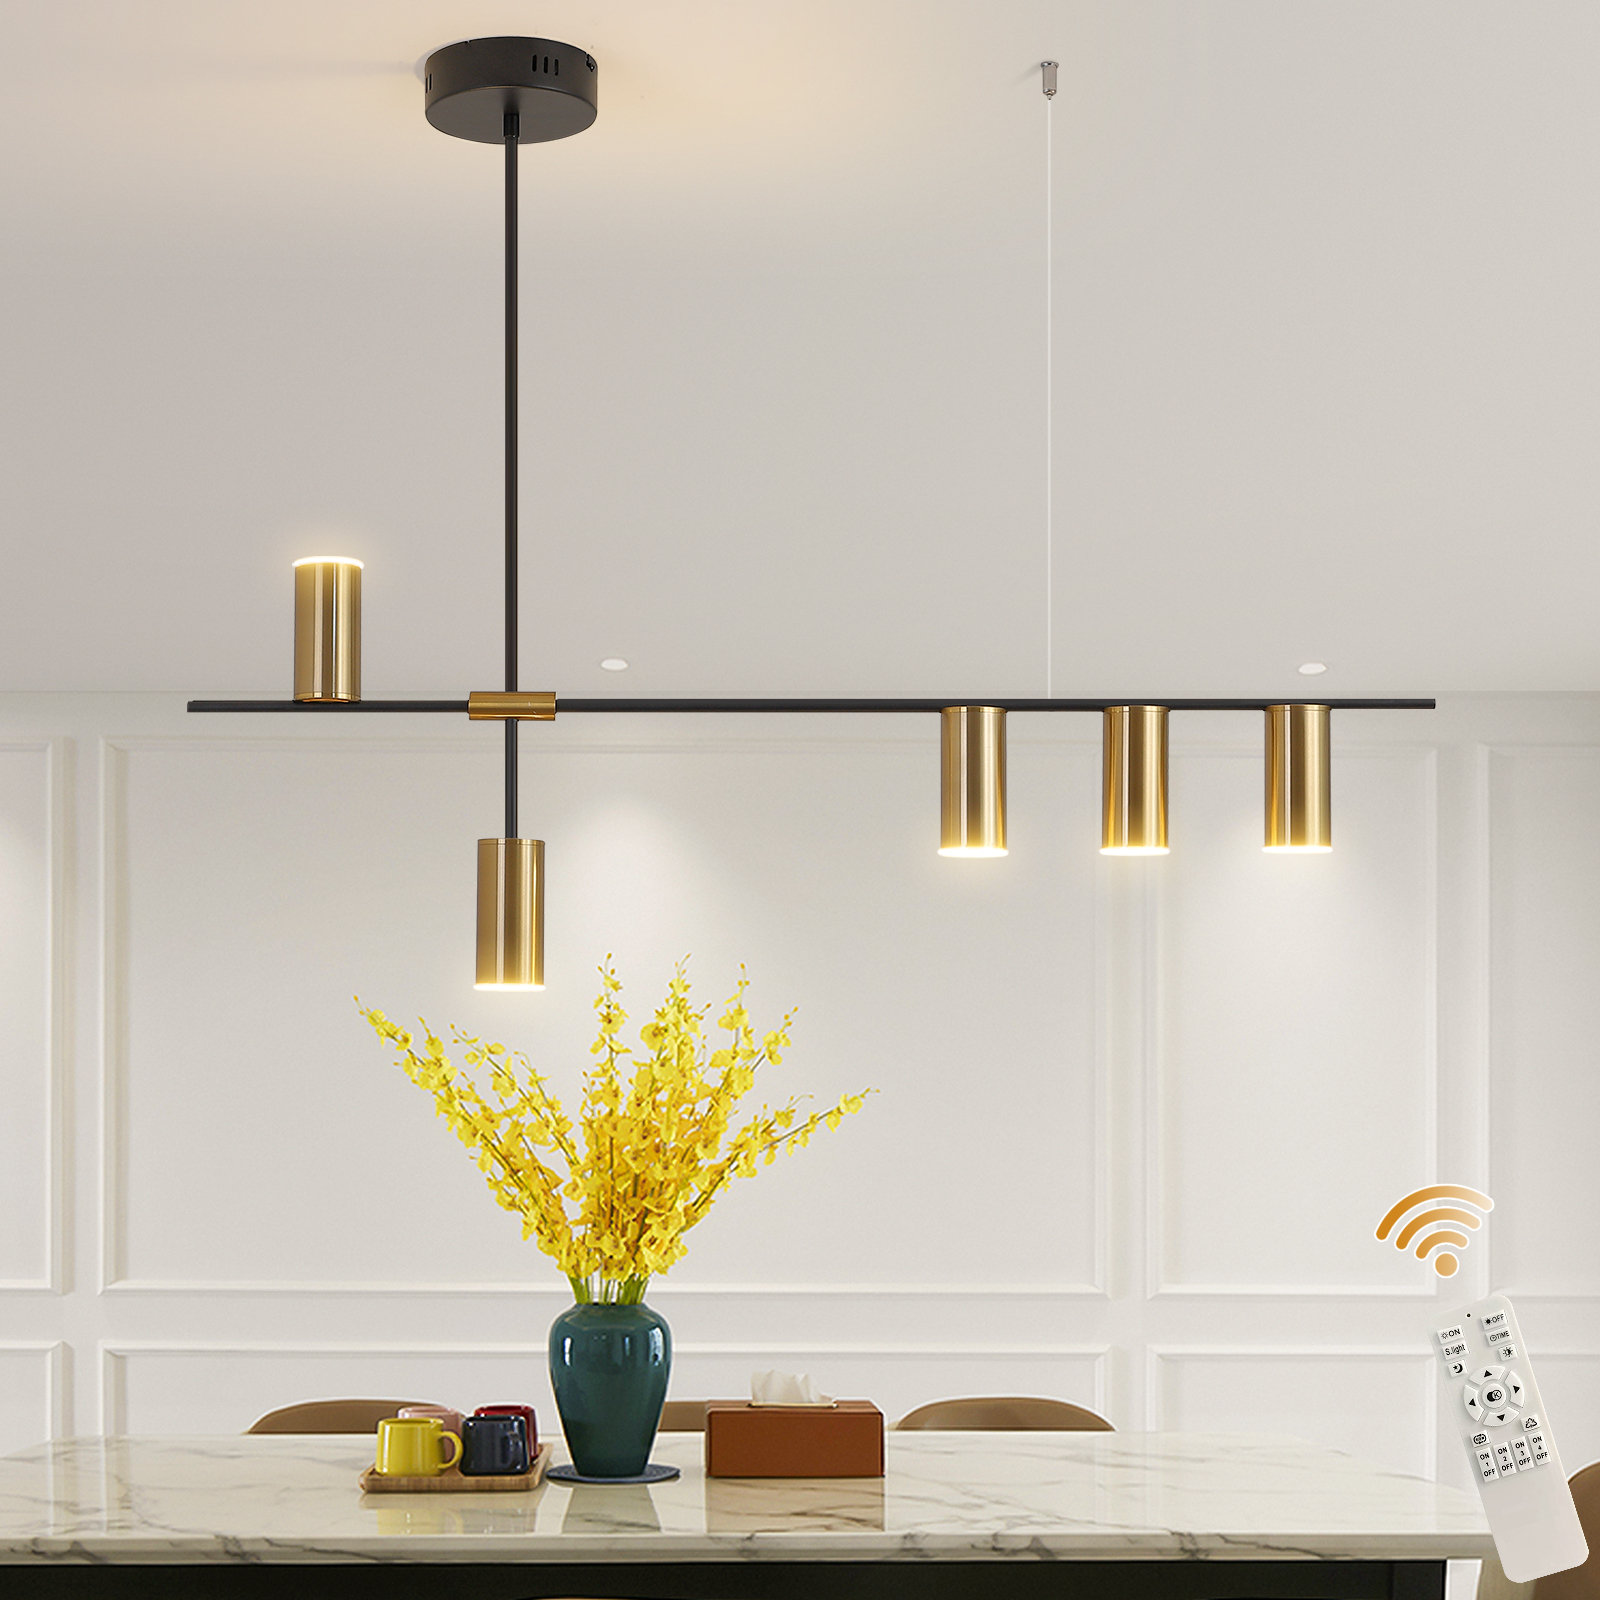 Pendant Light Fixtures Dimmable Modern Led Chandelier Lighting With Spotlights Adjustable Linear Hanging Pendant Light For Kitchen Island Dining Room Living Room 